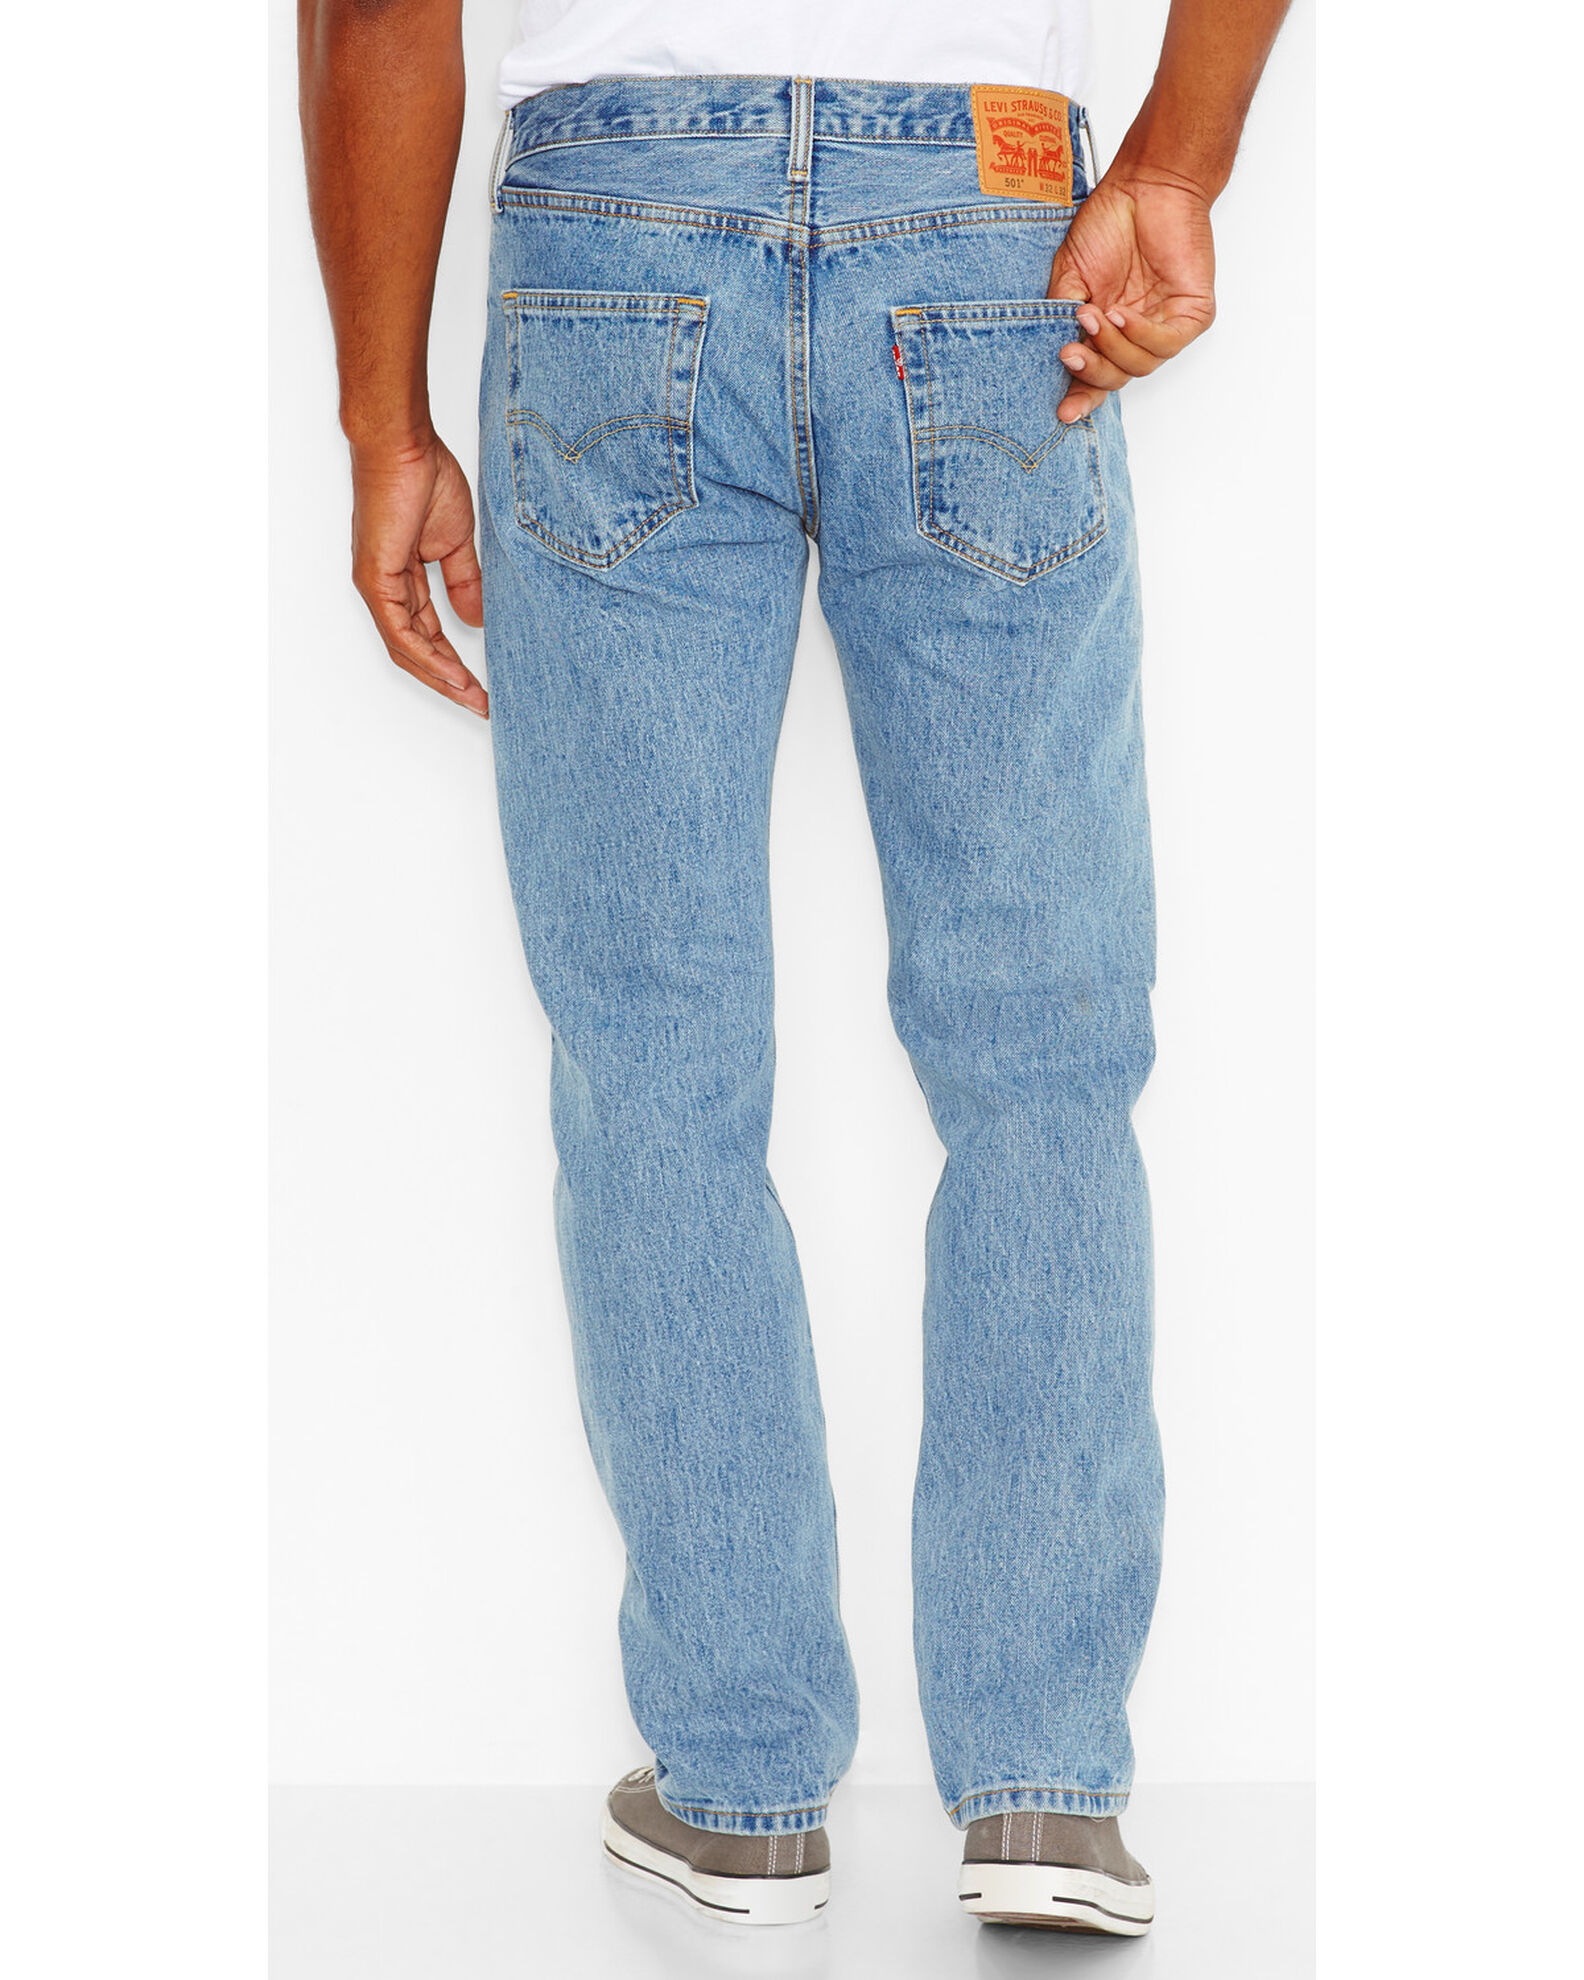 Levi's Men's 501 Original Fit Stonewashed Regular Straight Jeans | Boot Barn